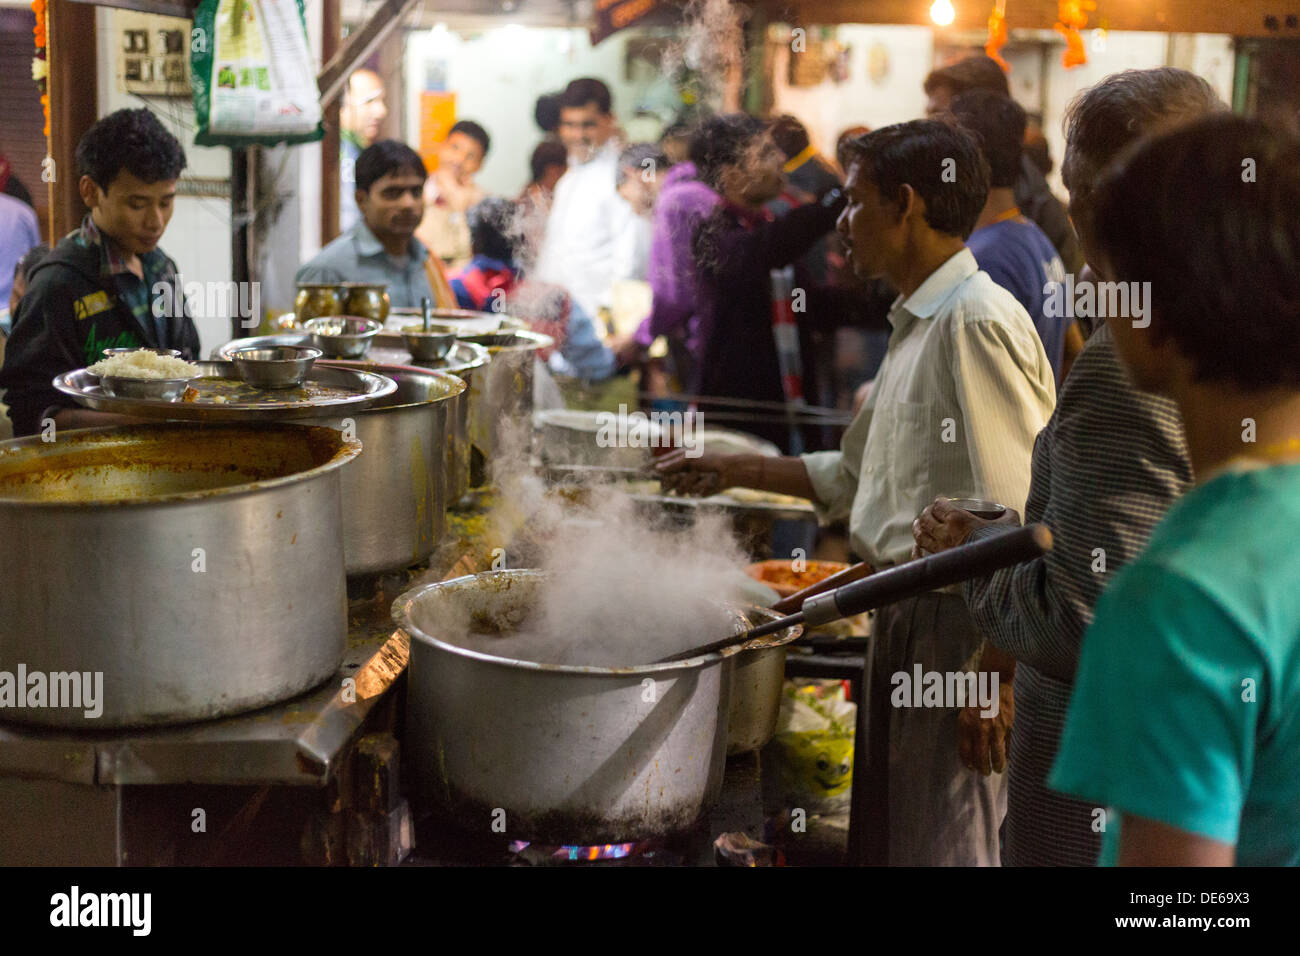 India, Uttar Pradesh, New Delhi typical evening instant food scene in the Paharganj district Stock Photo